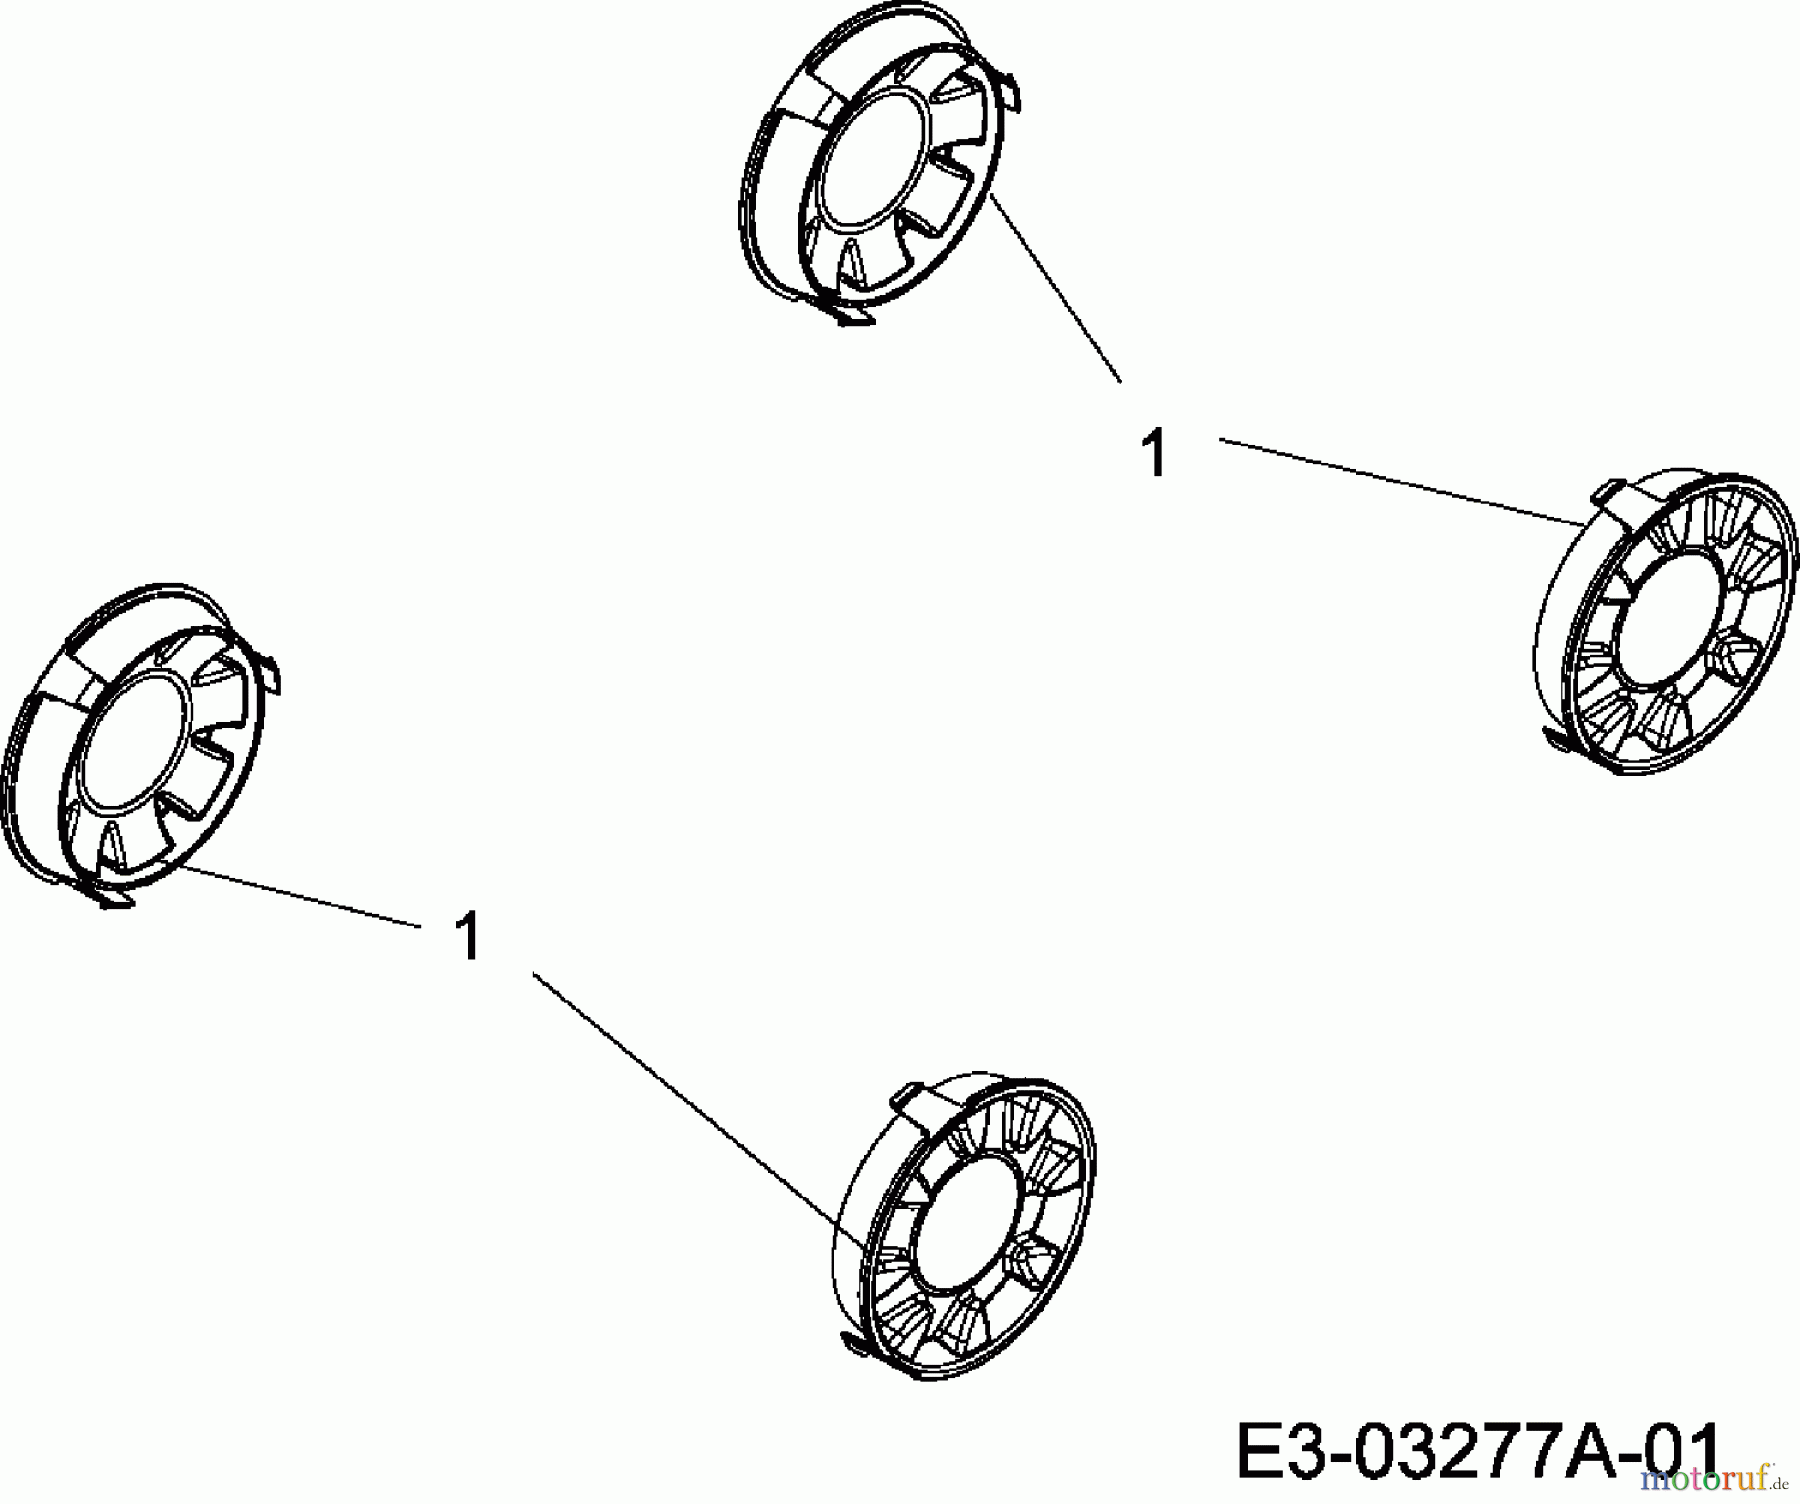  Raiffeisen Elektromäher RE 40 18C-N4S-628  (2008) Radkappen